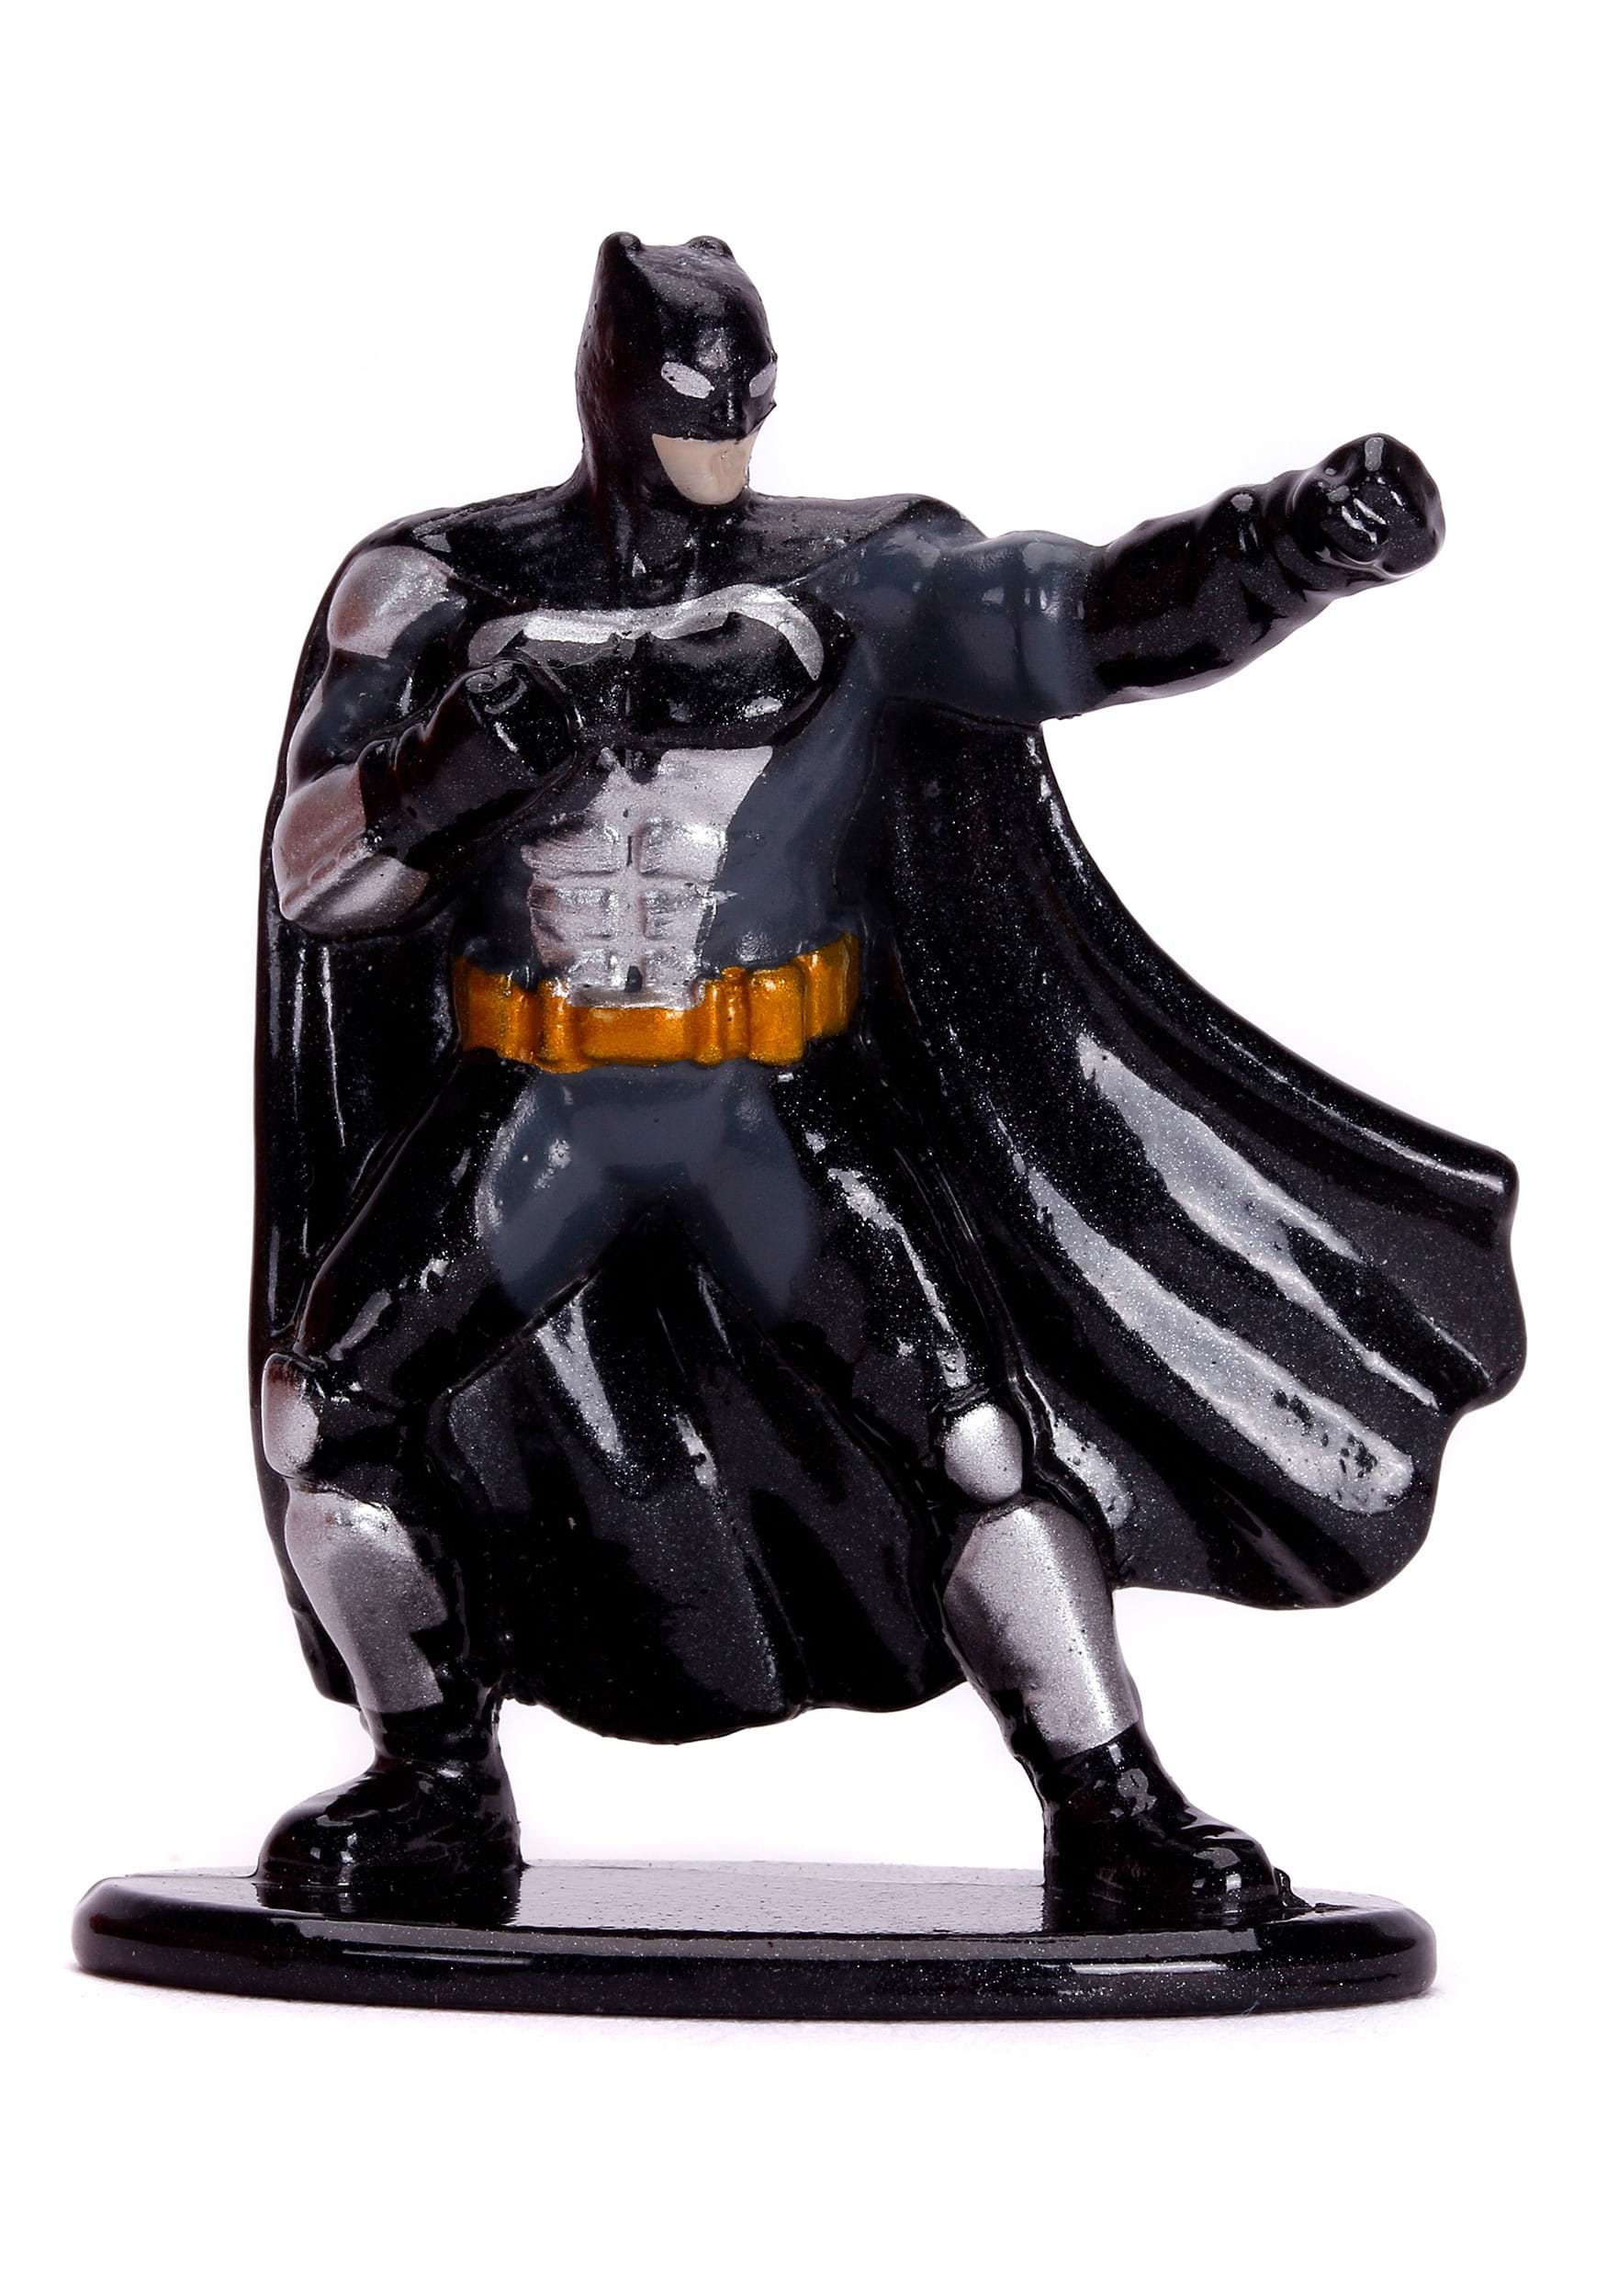 1:32 Scale Batman Justice League Batmobile W/ Batman Figure